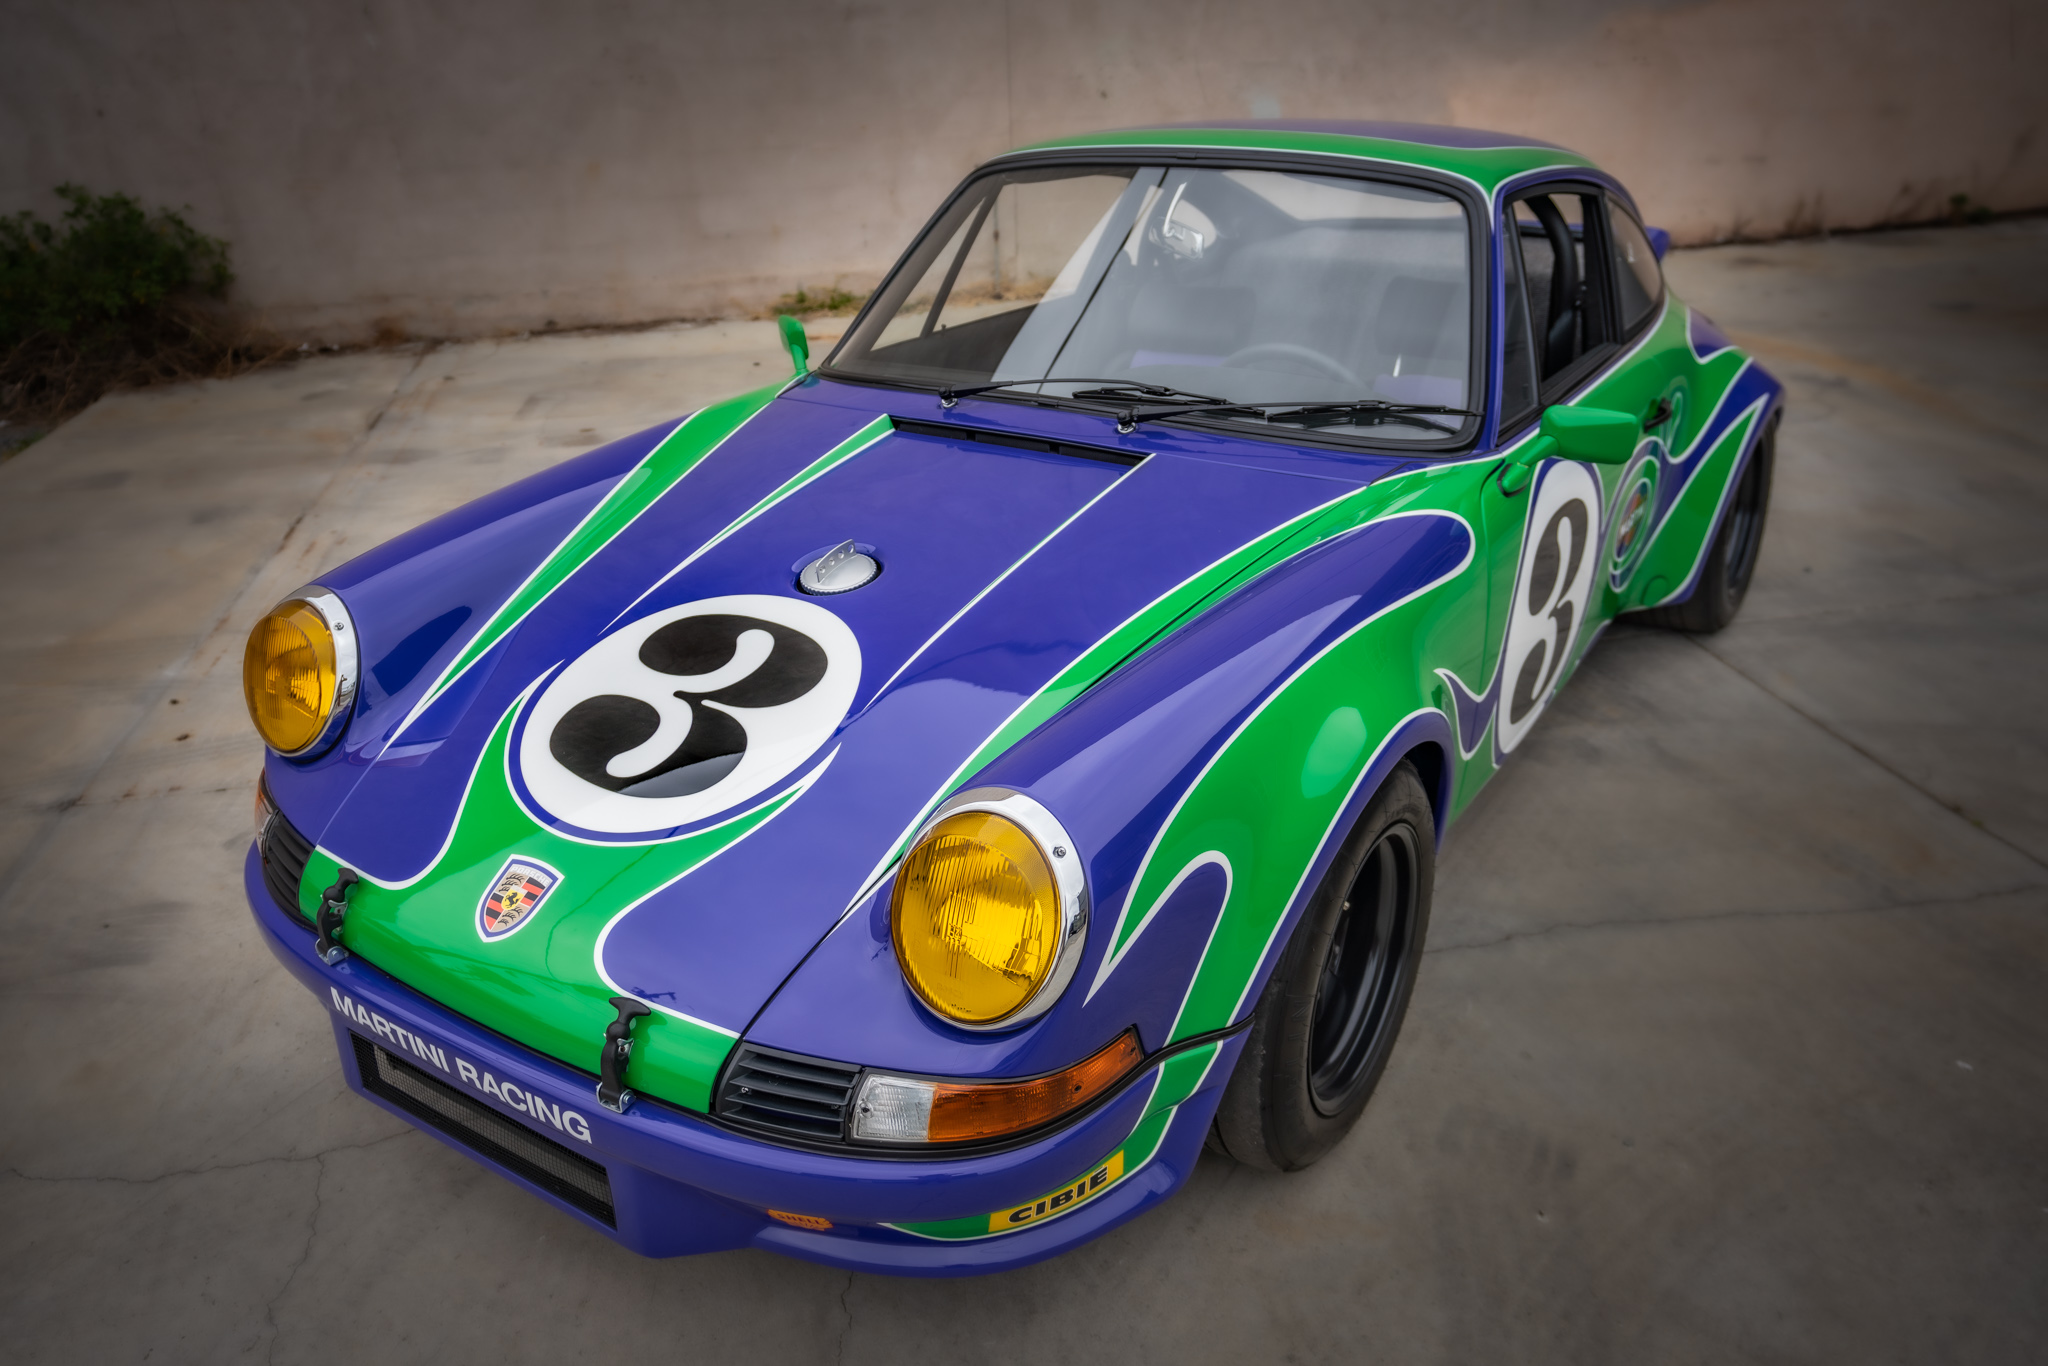 1973 911 RSR “Hippie” Porsche tribute #100151 For Sale - Ferraris Online